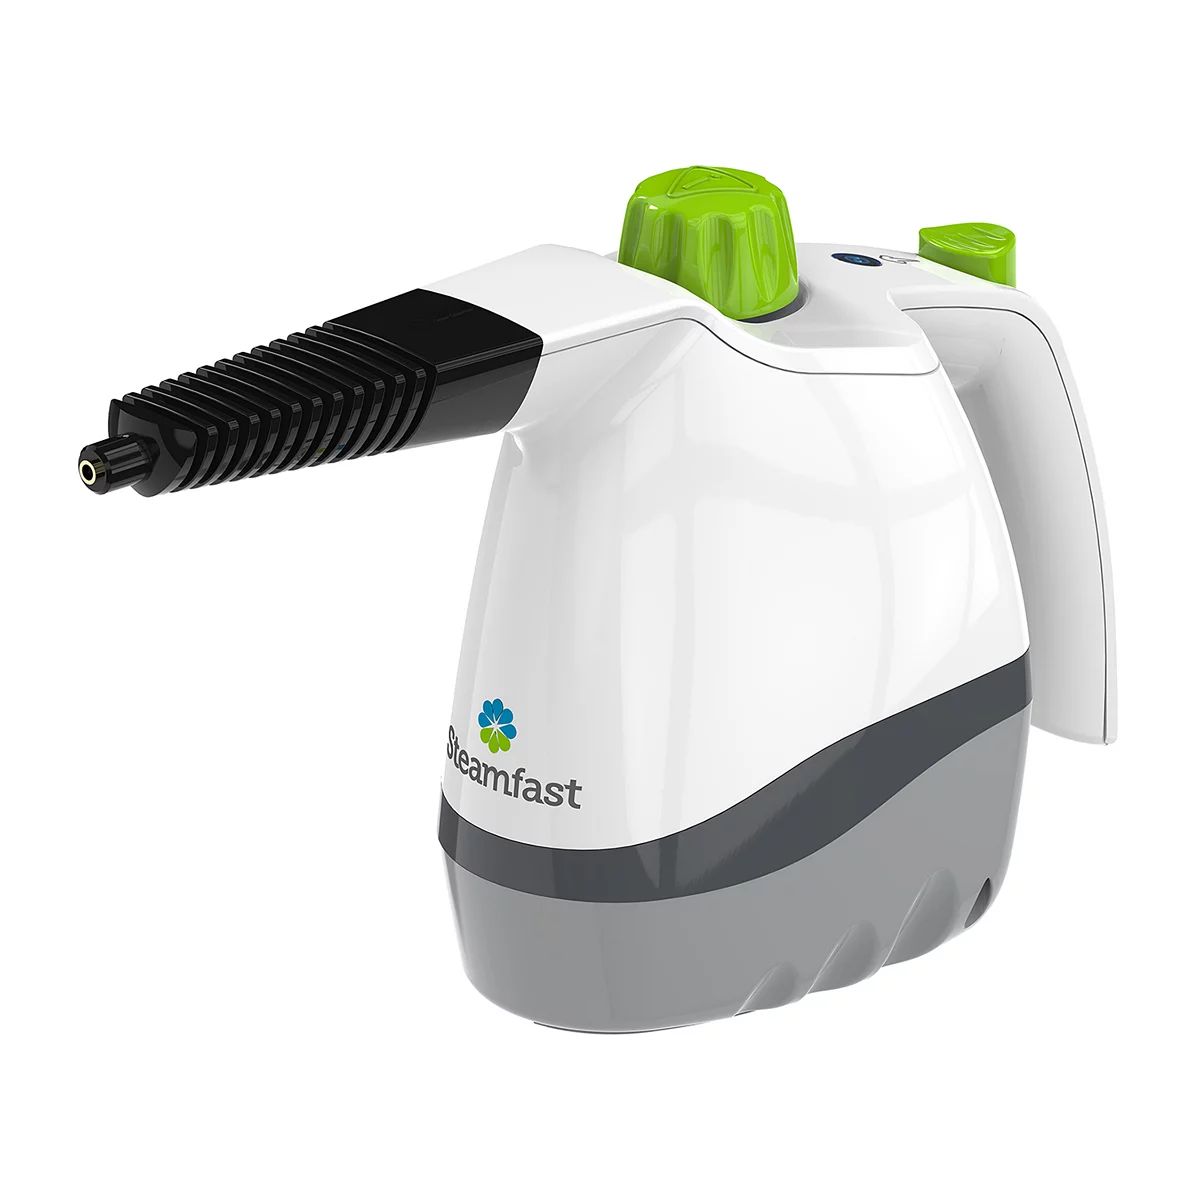 SteamFast Everyday Handheld Steam Cleaner | Kohl's